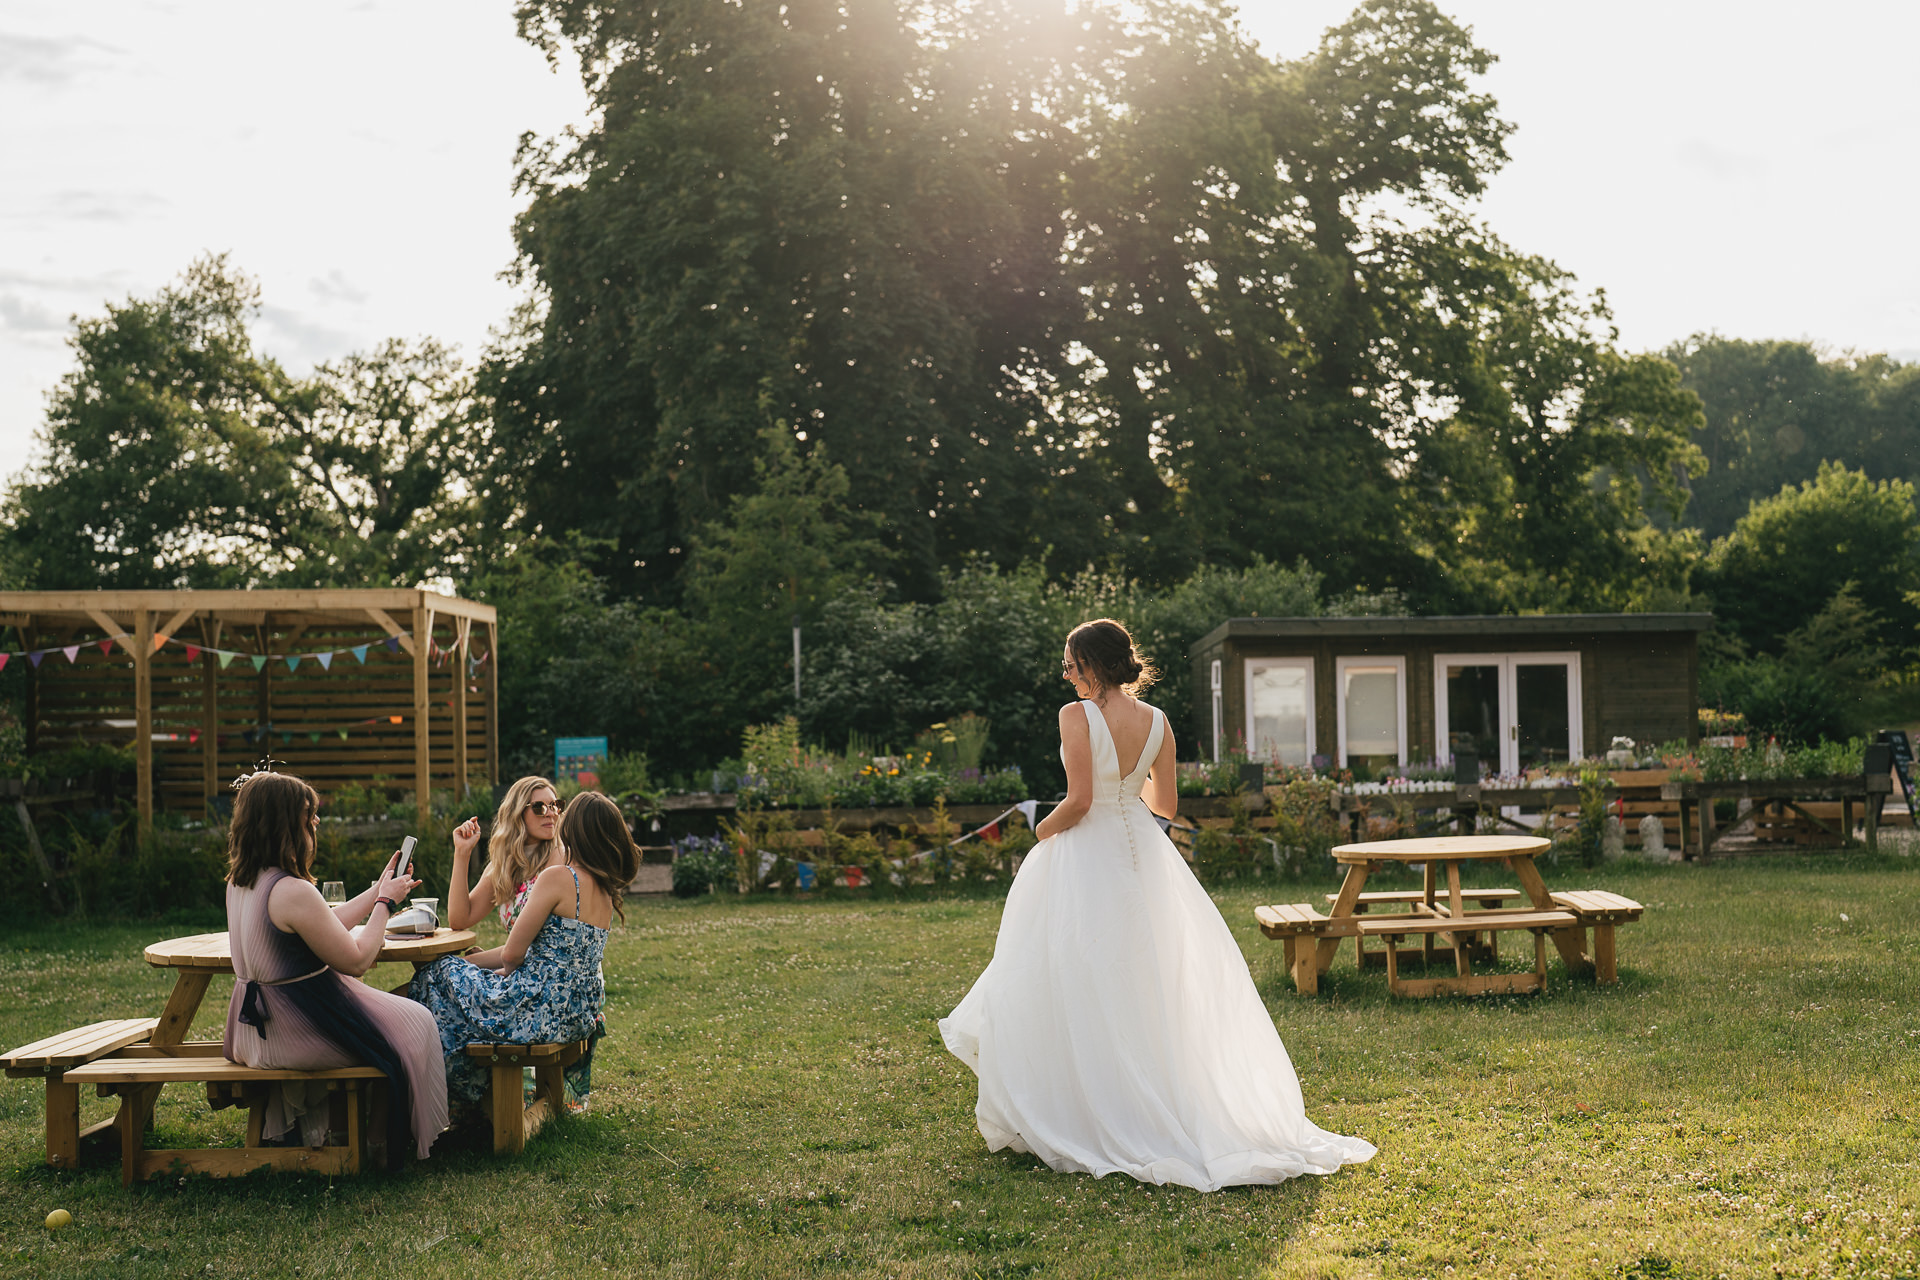 A bride in a wedding dress walking across the grass in evening sunlight at a Hestercombe Gardens wedding reception